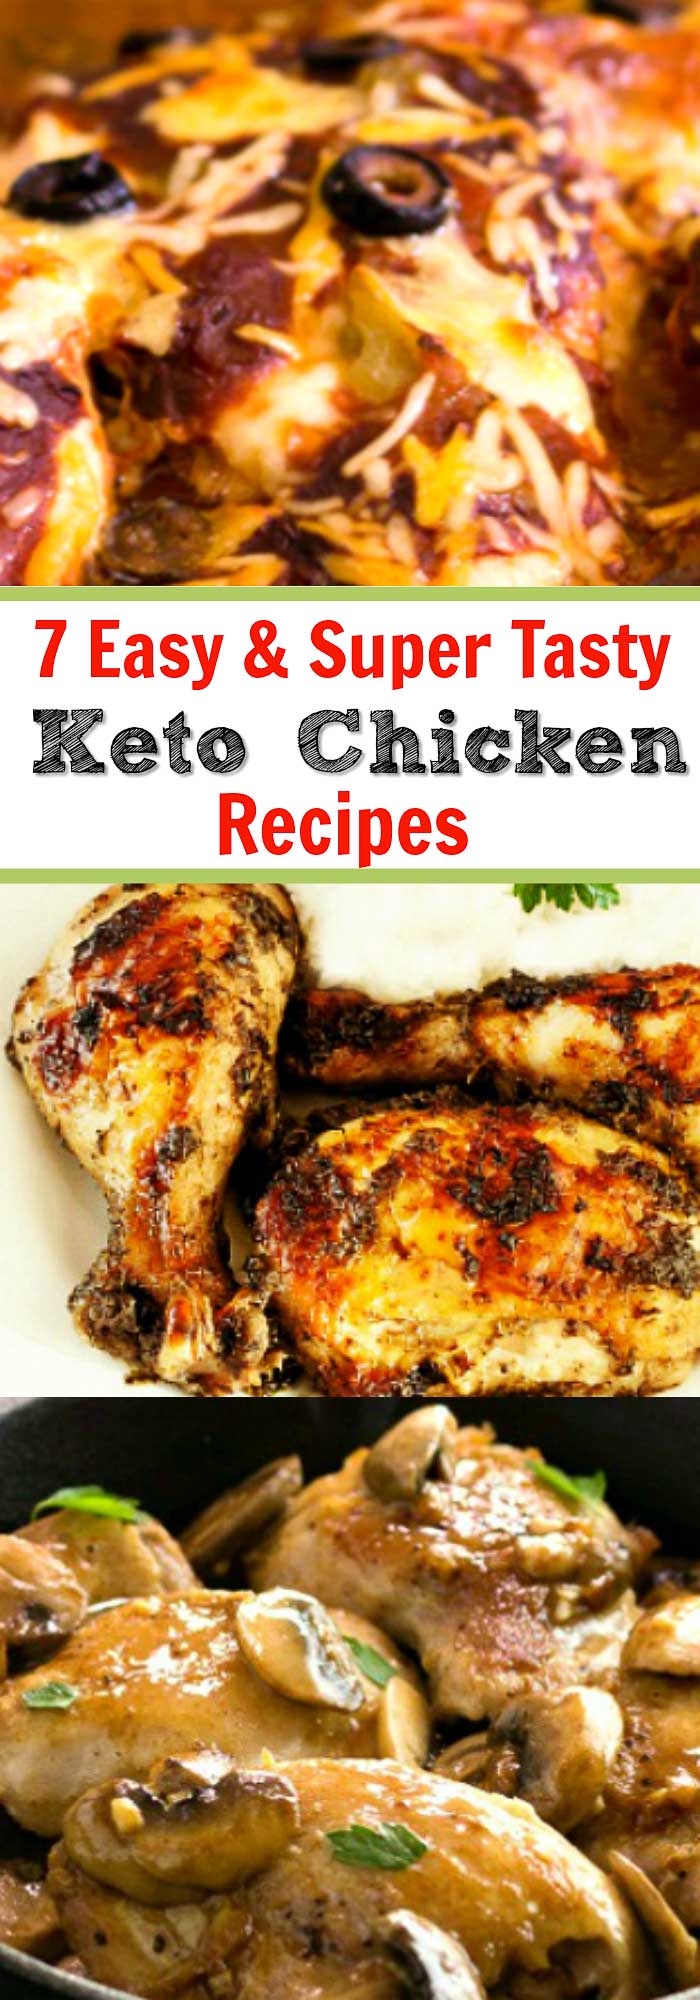 7 Best Easy Keto Chicken Recipes